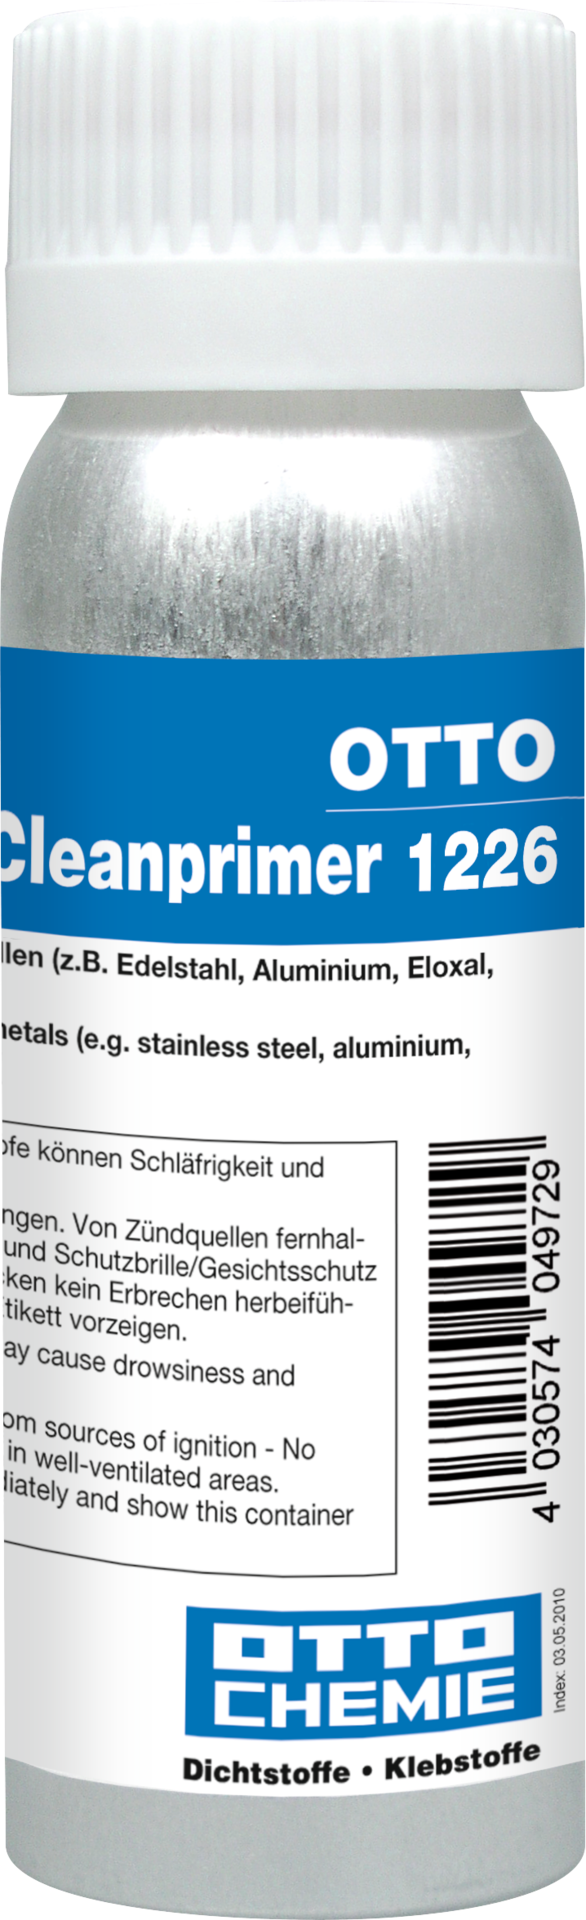 OTTO Cleanprimer 1226 - Der Spezial-Cleanprimer